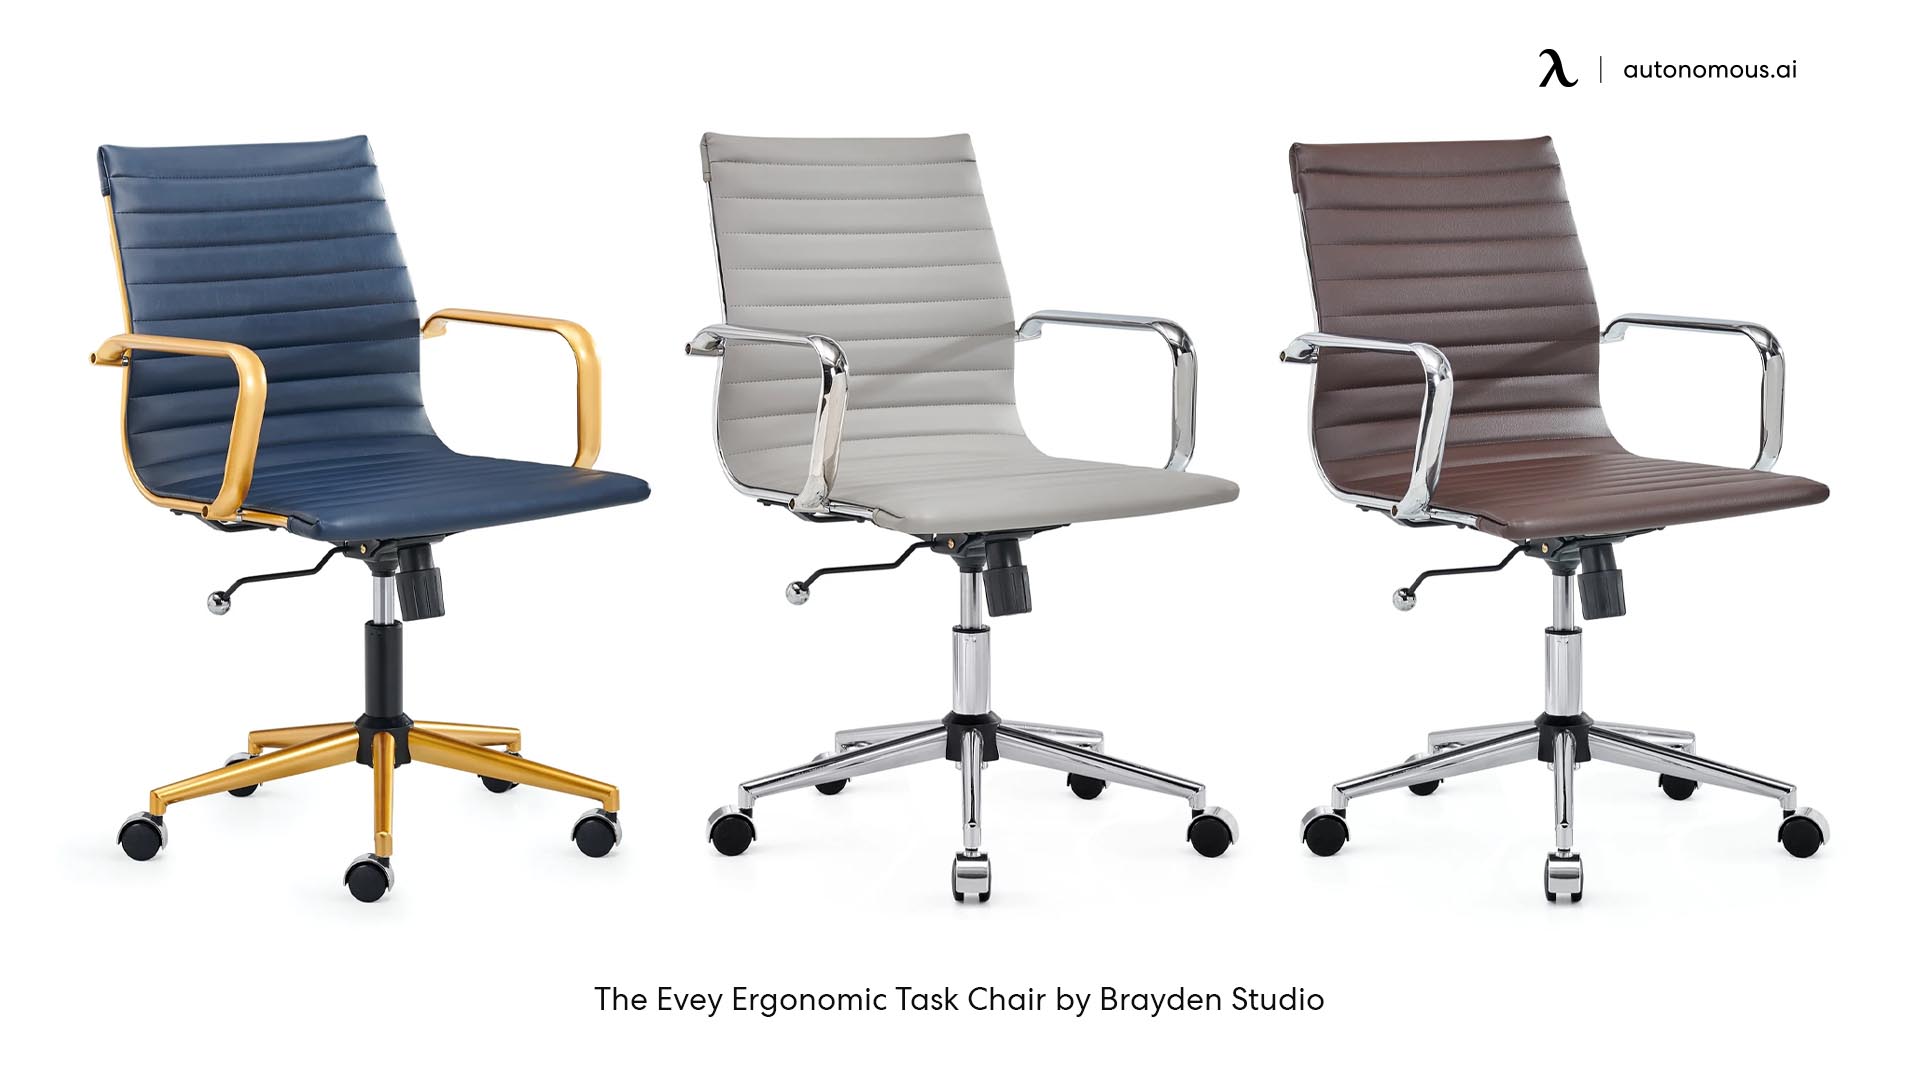 The Evey Ergonomic Task Chair